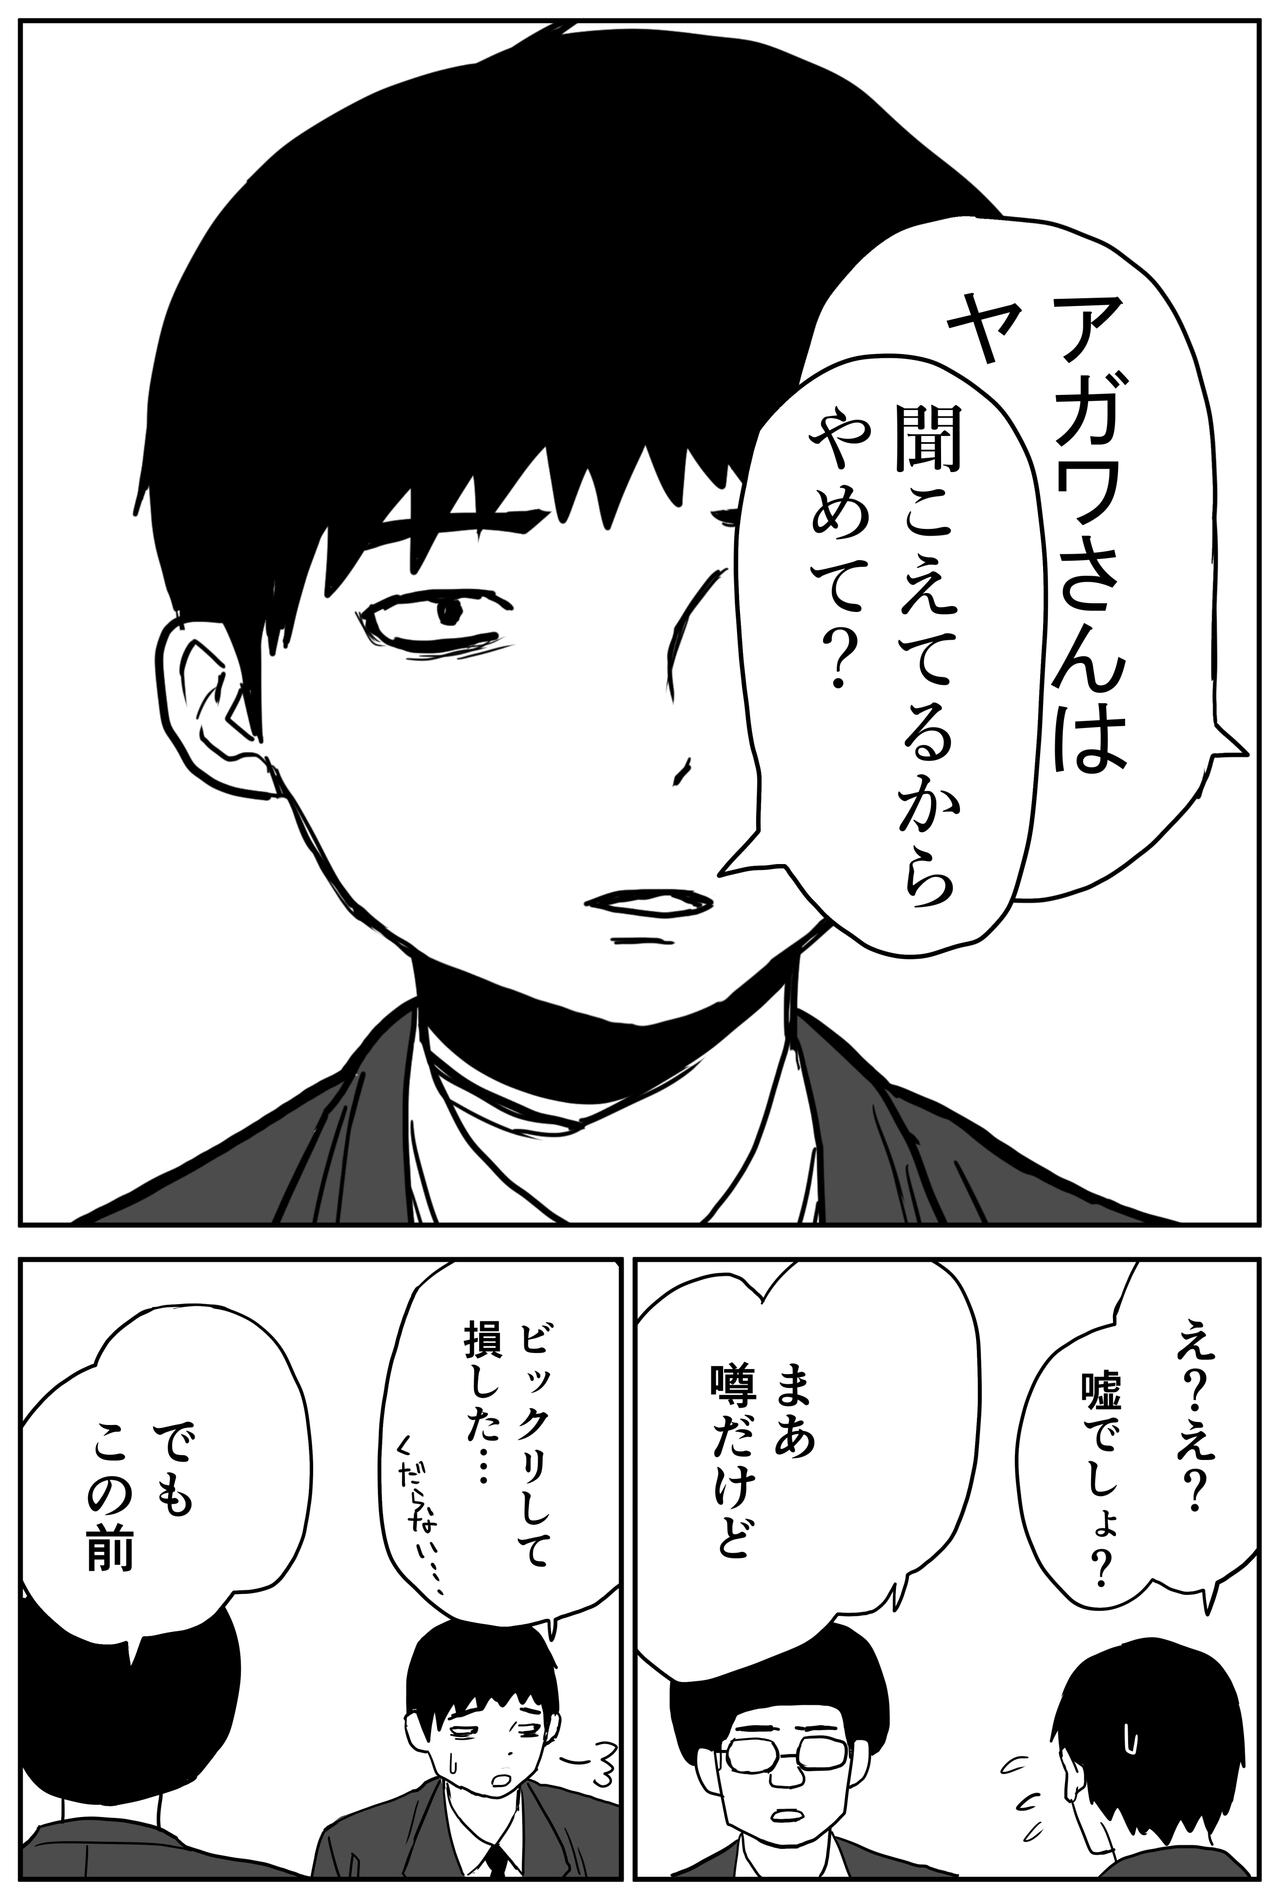 Gal JK Ero Manga Ch.1-27 - Page 9 - HentaiRox